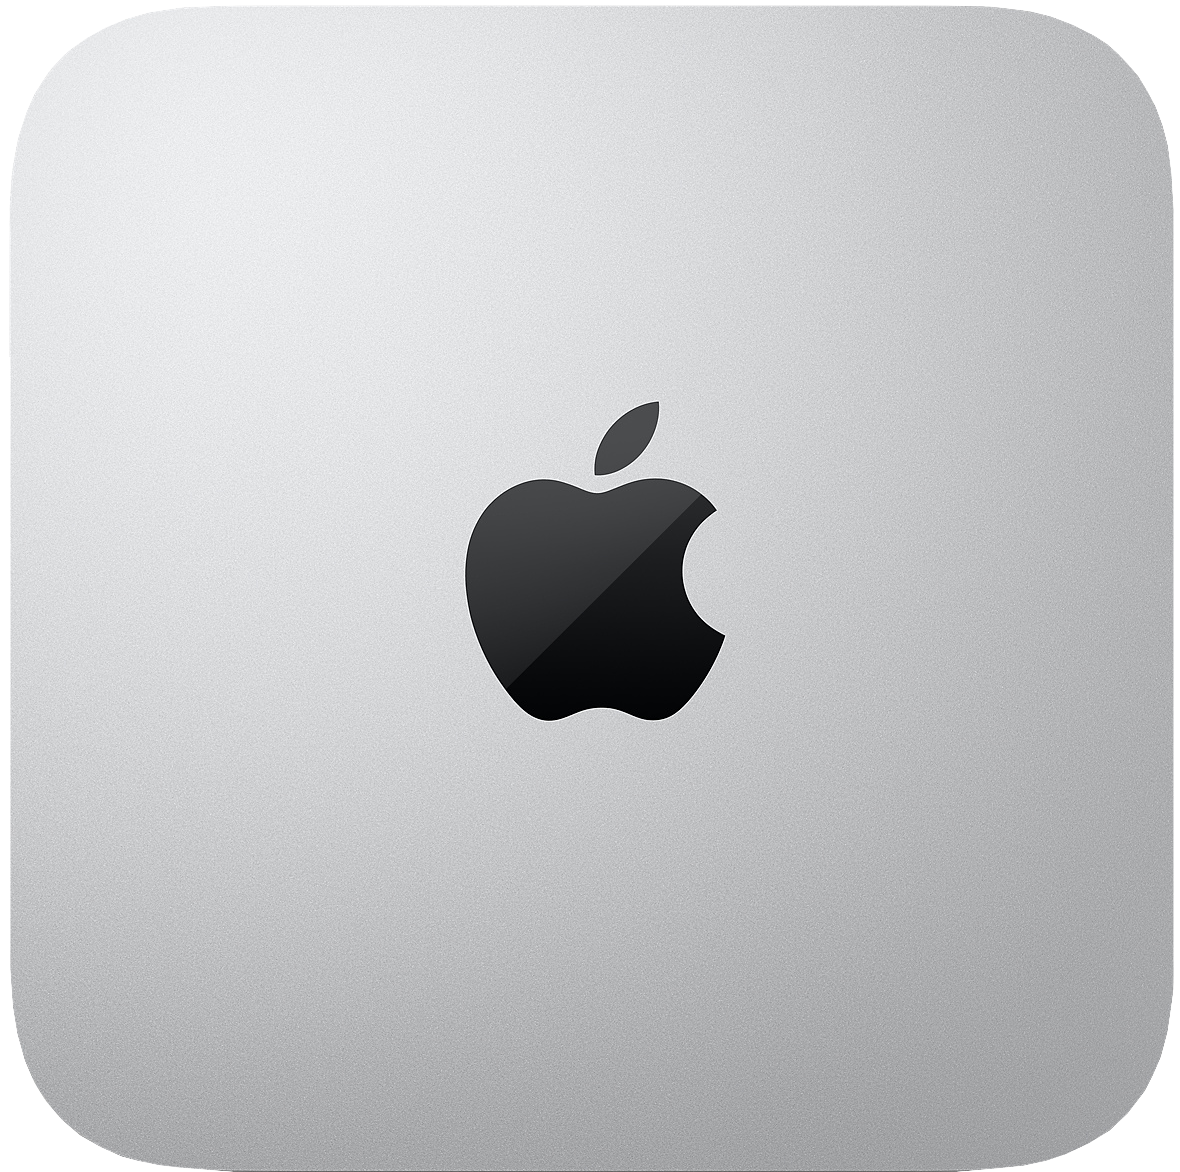 Apple symbol